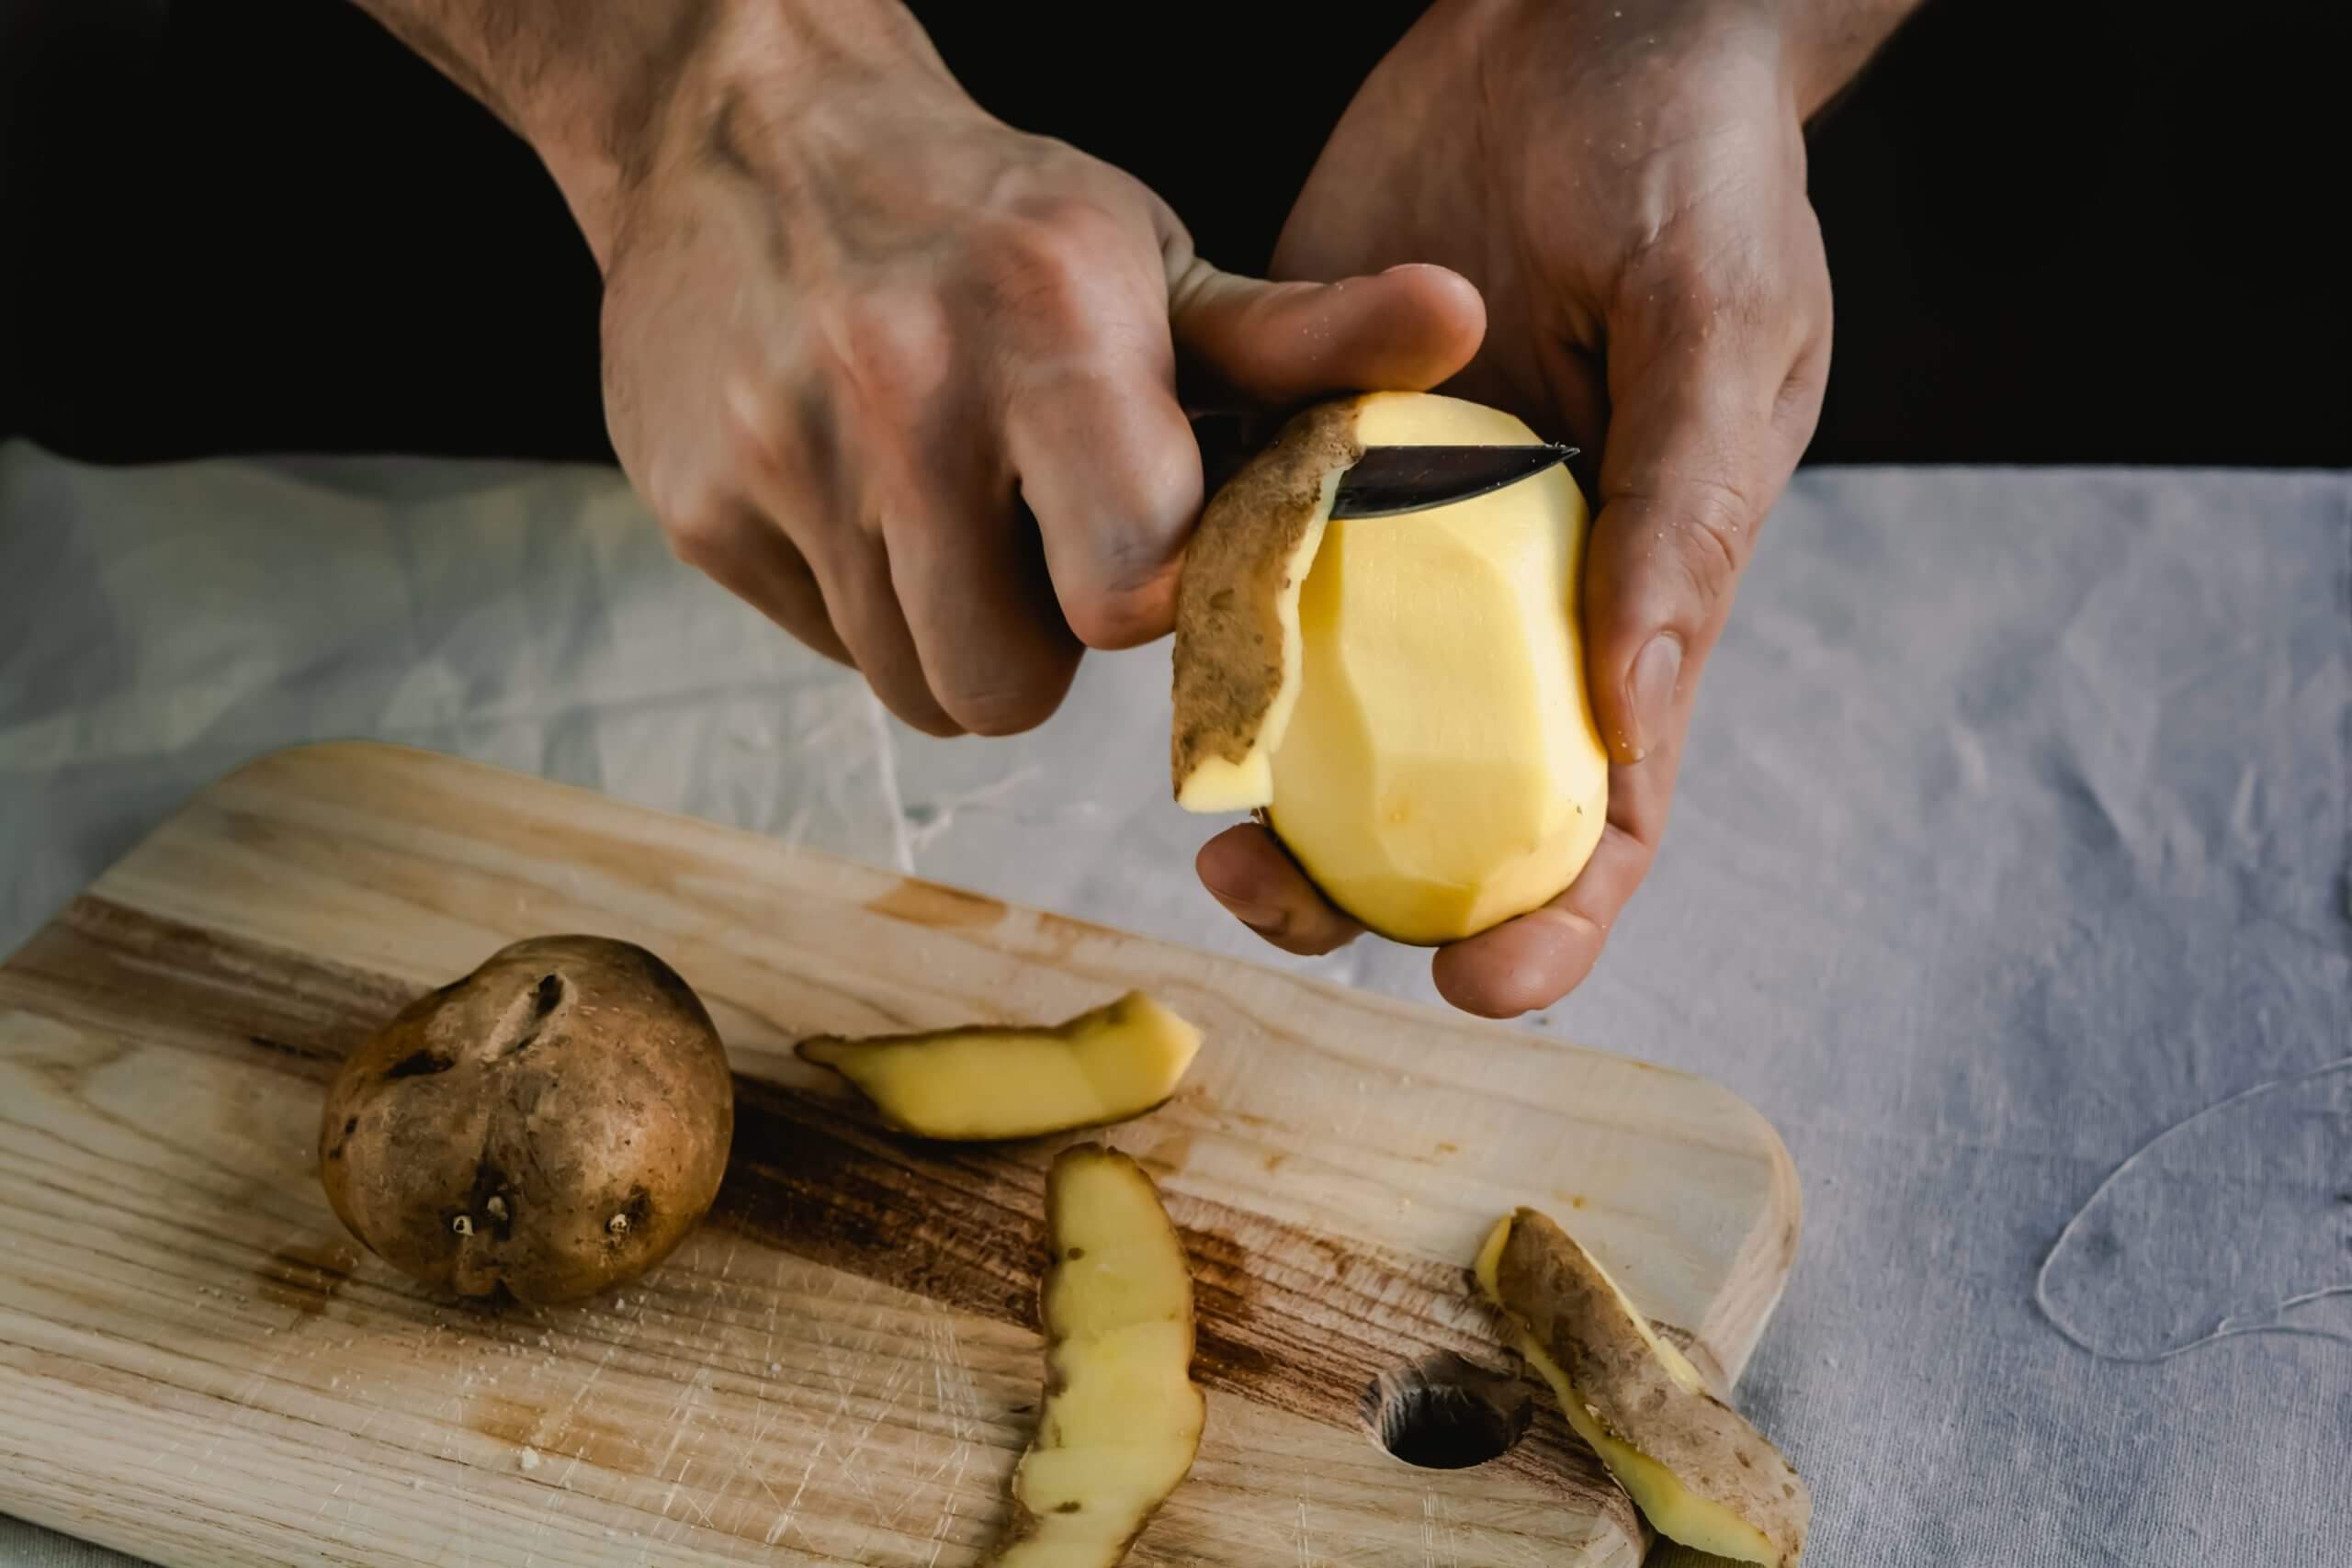 https://www.escoffieronline.com/wp-content/uploads/2020/06/Chef-peeling-potatoes-on-wooden-cutting-board-1-scaled.jpeg